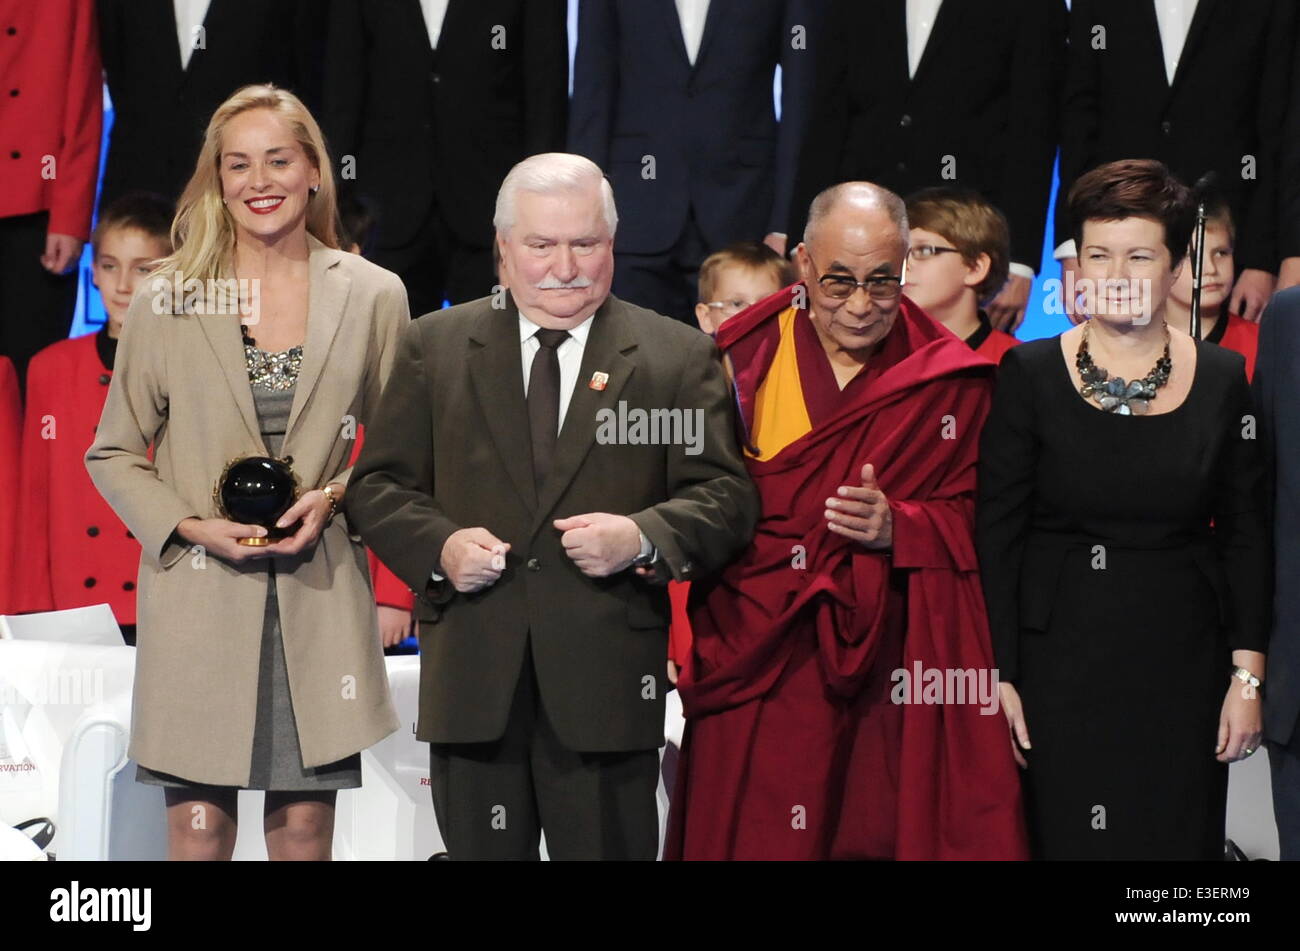 13th Summit of Nobel Prize winners in Poland  Featuring: Sharon Stone,Lech Walesa,Dalai Lama,Hanna Gronkiewicz-Waltz Where: Warsaw, Poland When: 23 Oct 2013 Stock Photo